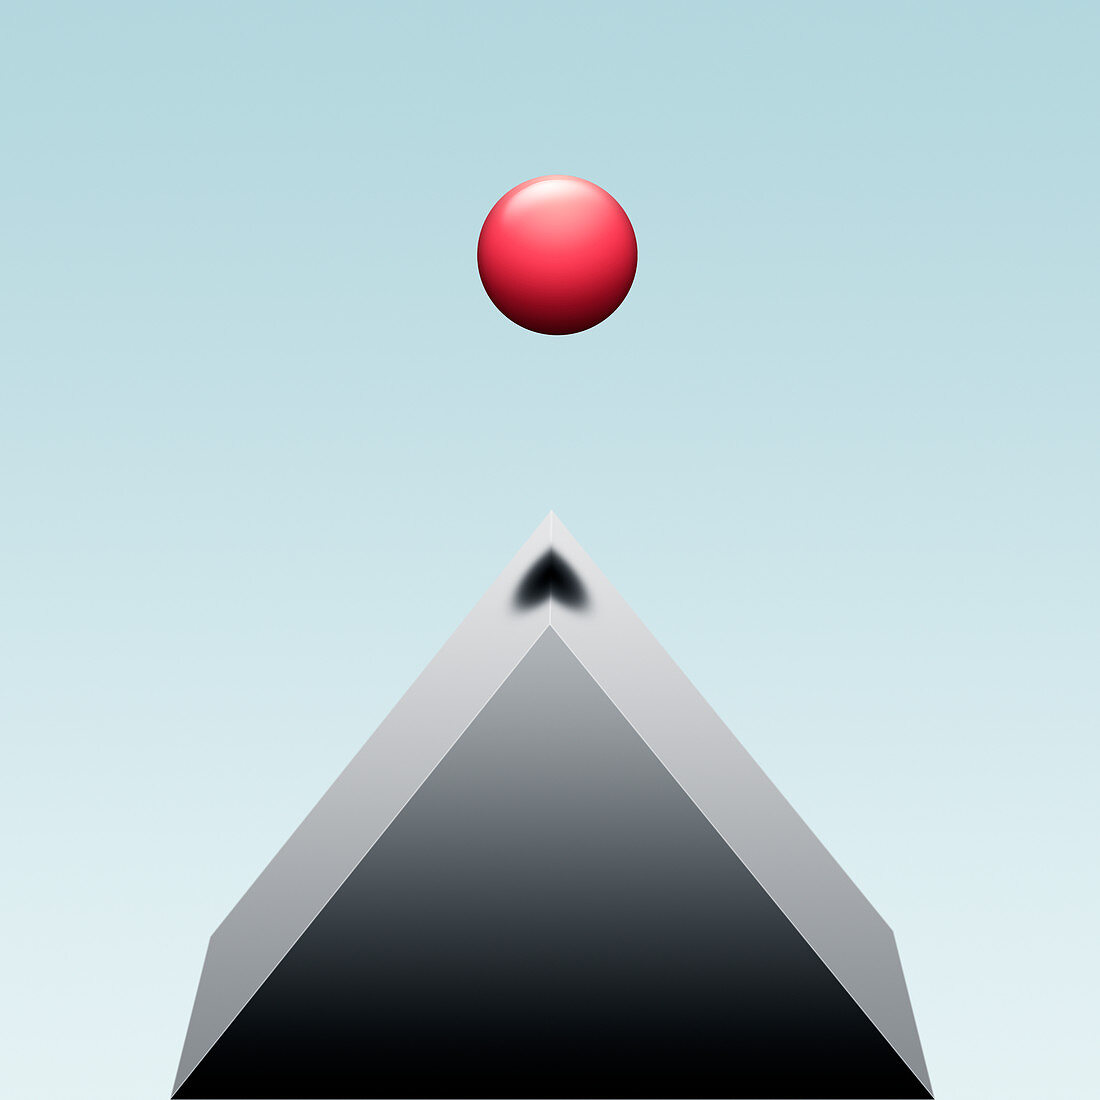 Ball suspended above pyramid, illustration